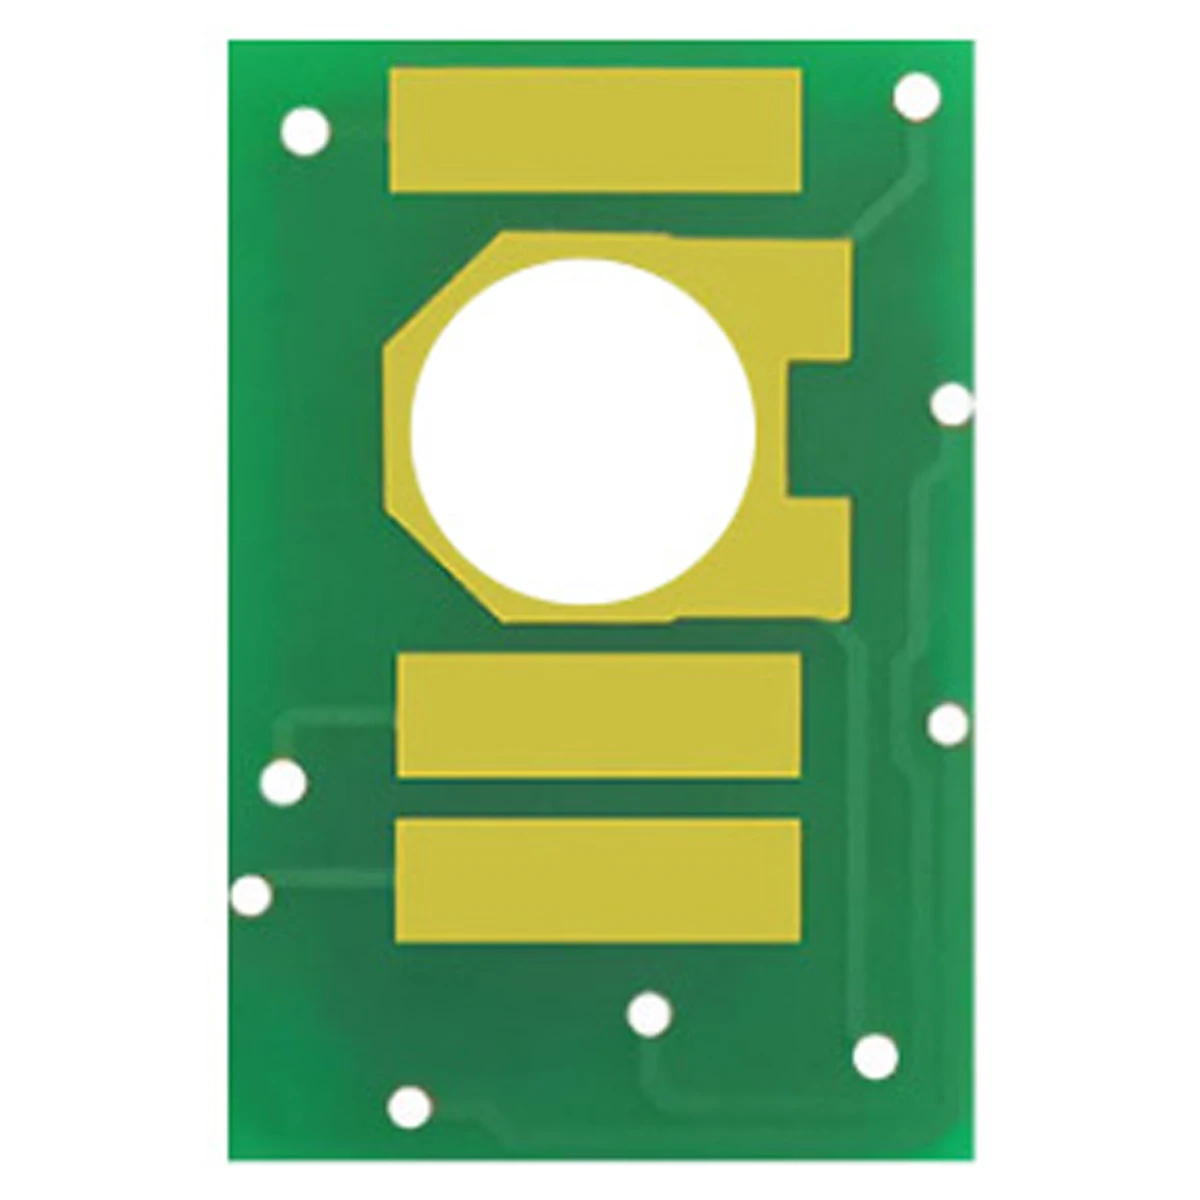 

4PCS Chips MPC3003 Toner Chip for Ricoh MPC3503 MPC3004 MPC3504 MP C3003 C3503 C3004 C3504 MPC 3503 Cartridge Reset Chips